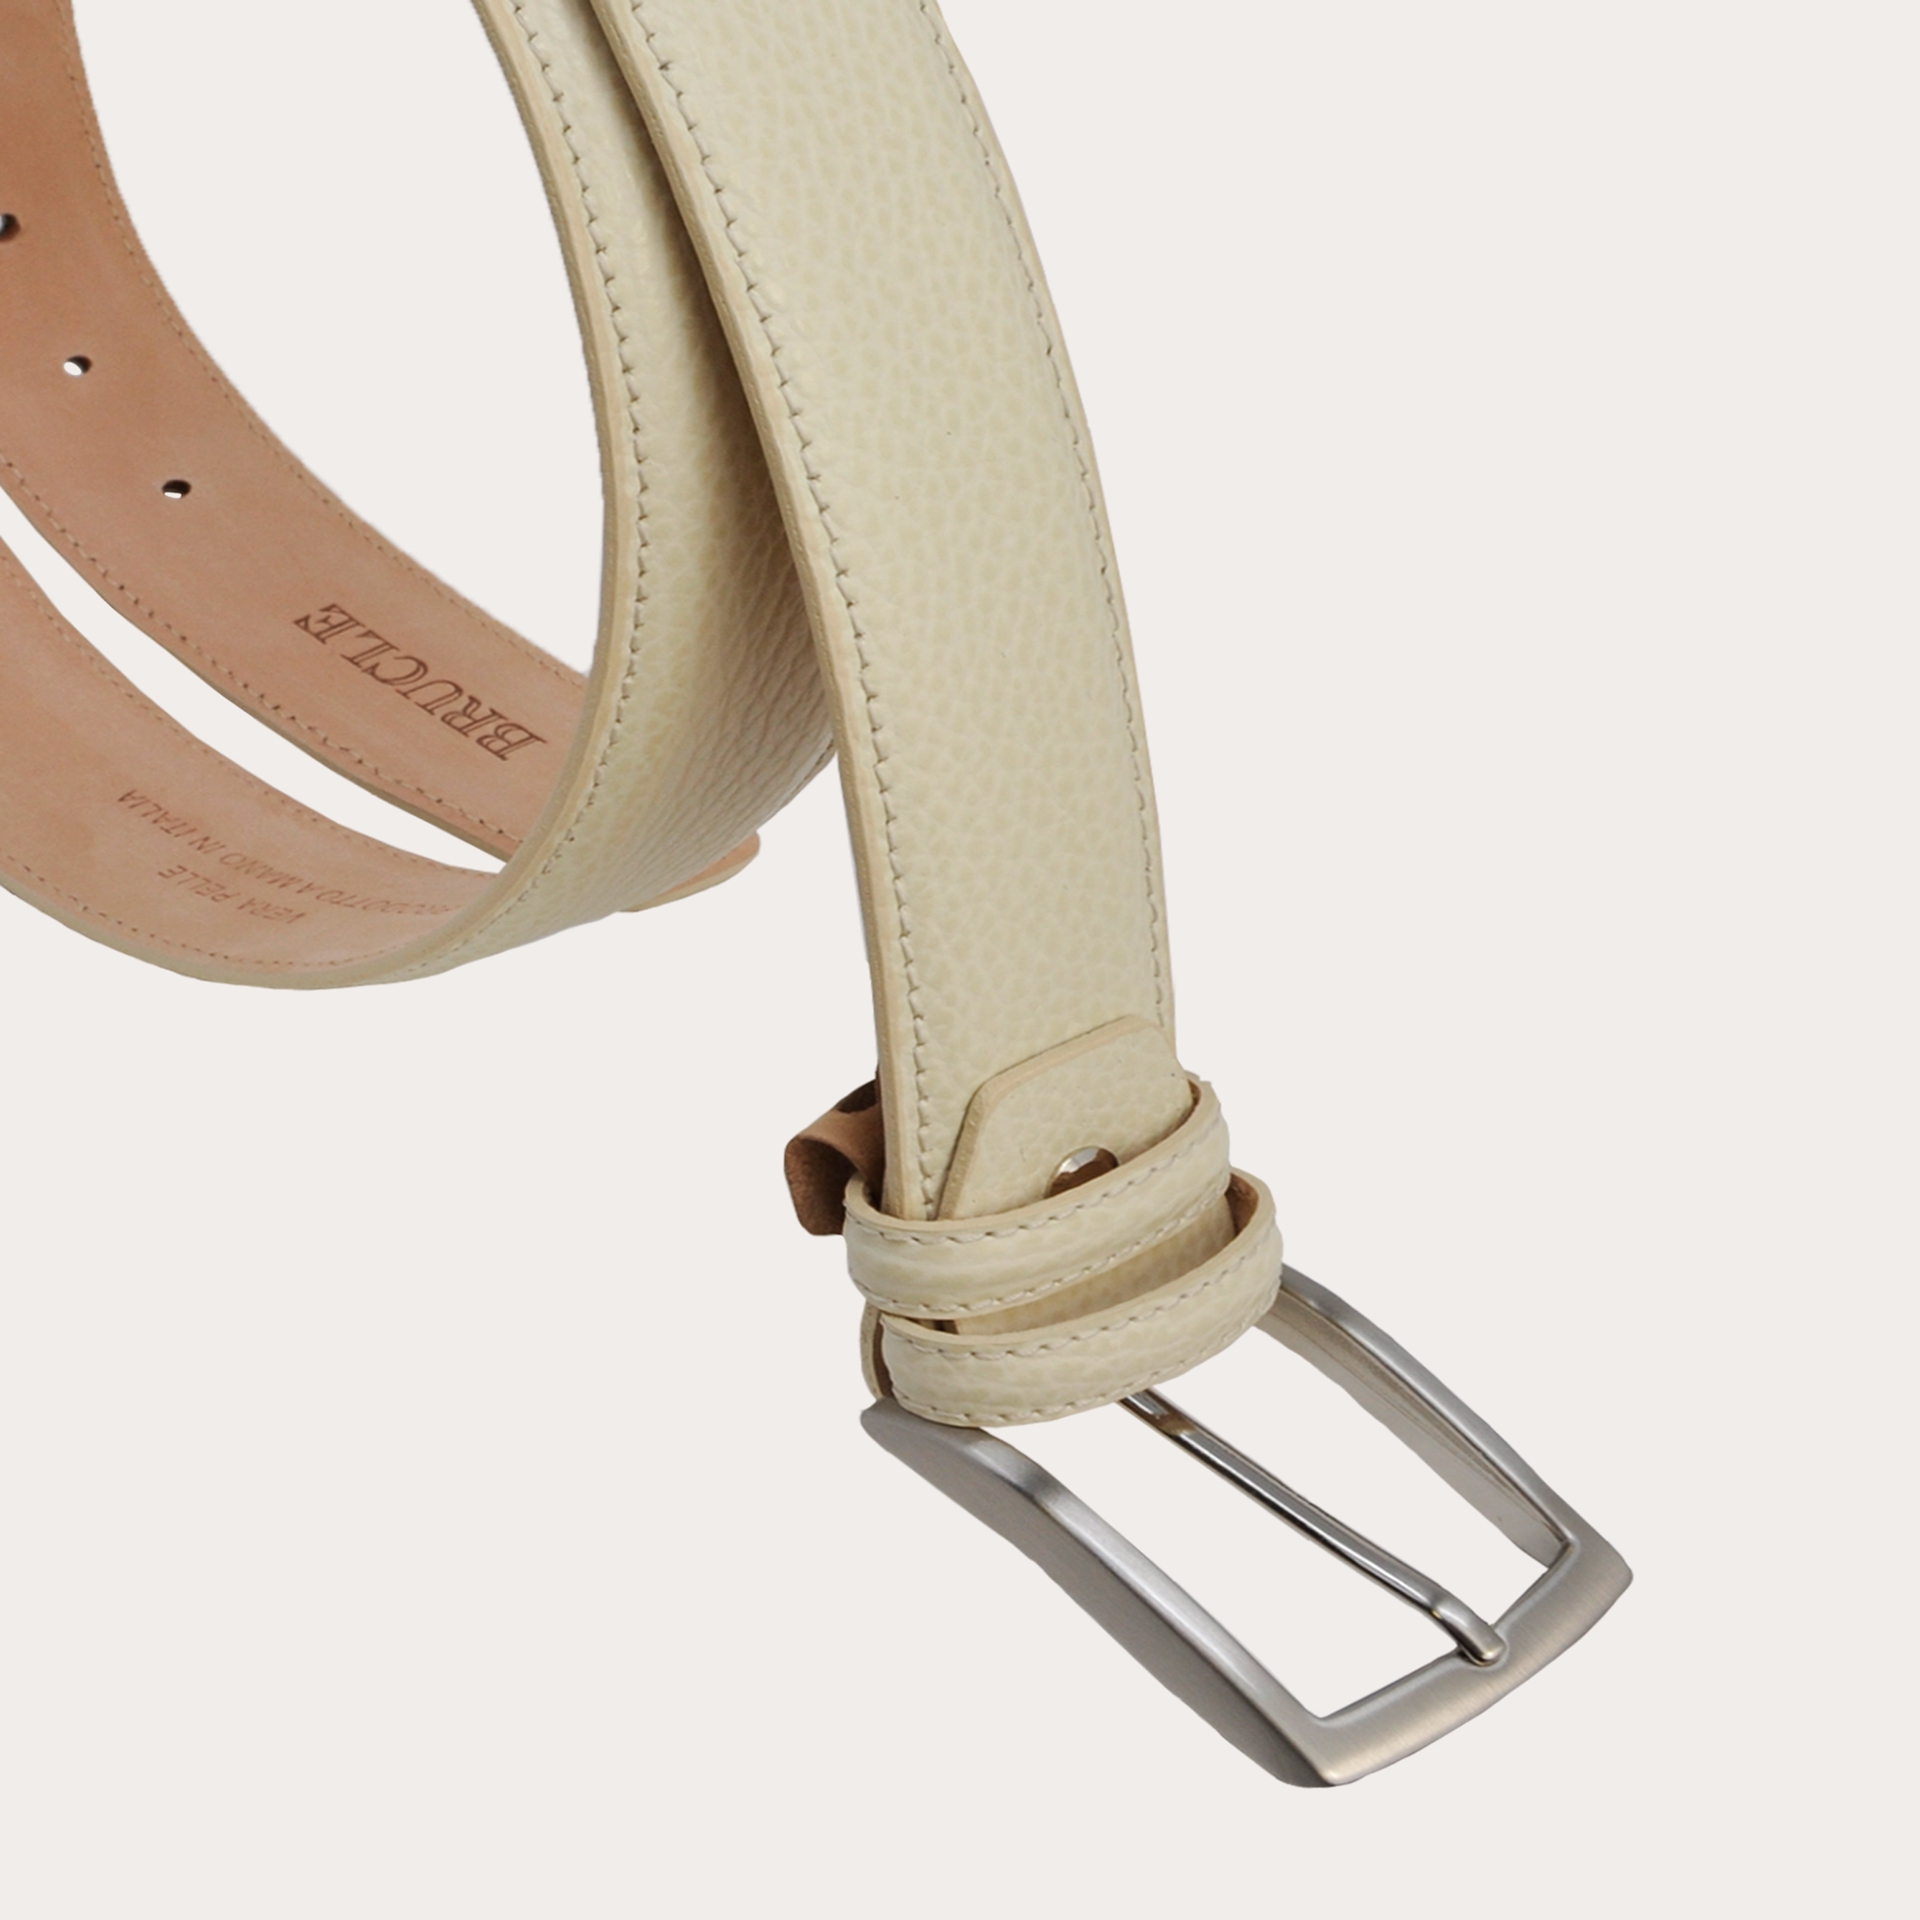 Genuine leather belt, cream colored